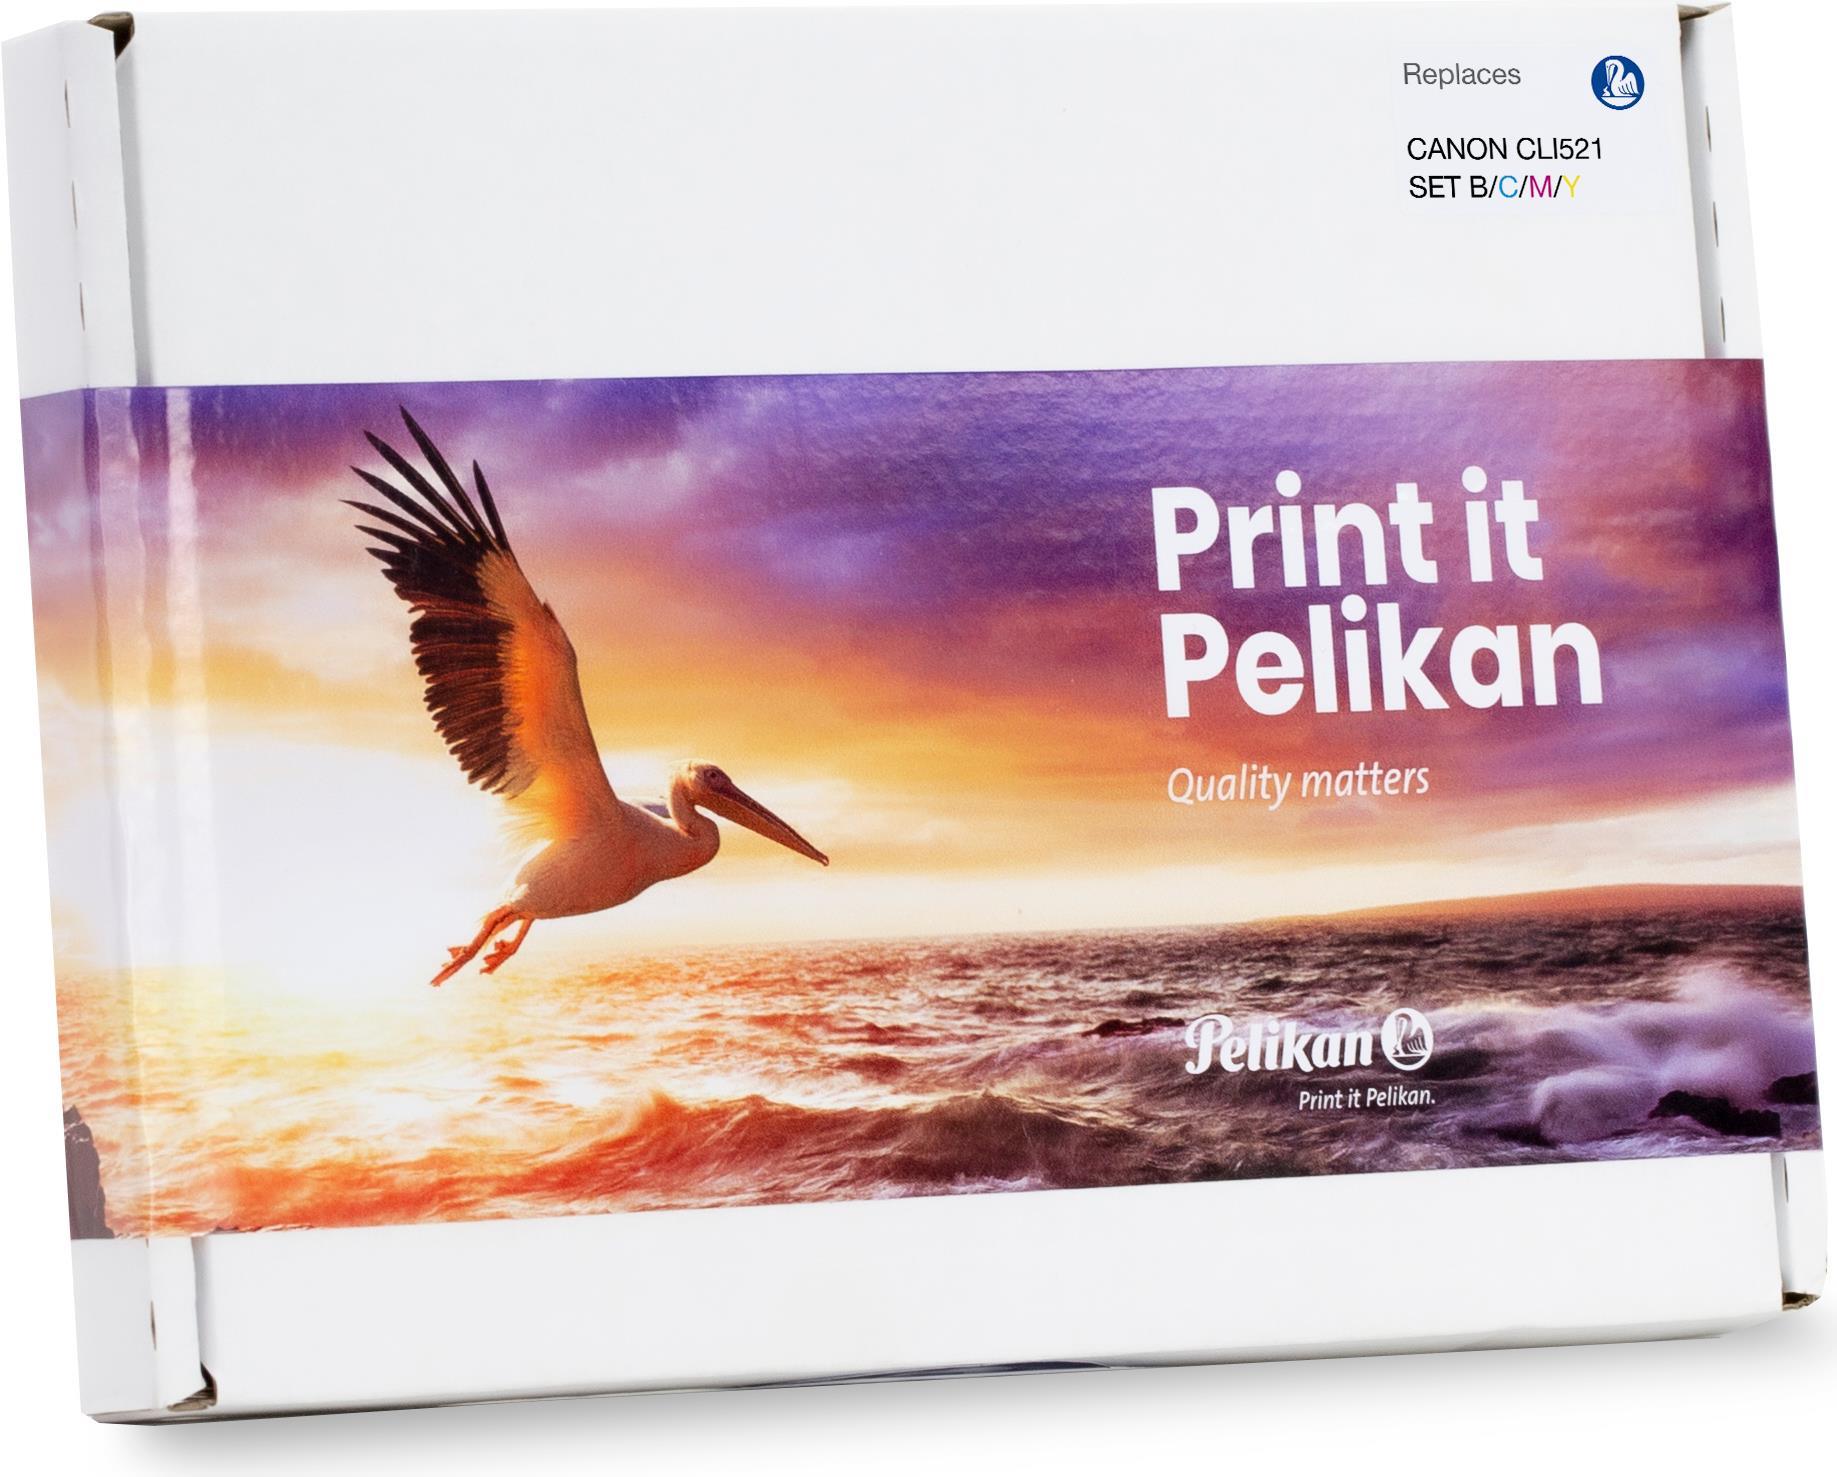 Pelikan PromoPack P51 4 Stück(e) Kompatibel Schwarz - Cyan - Magenta - Gelb (4950600) von Pelikan